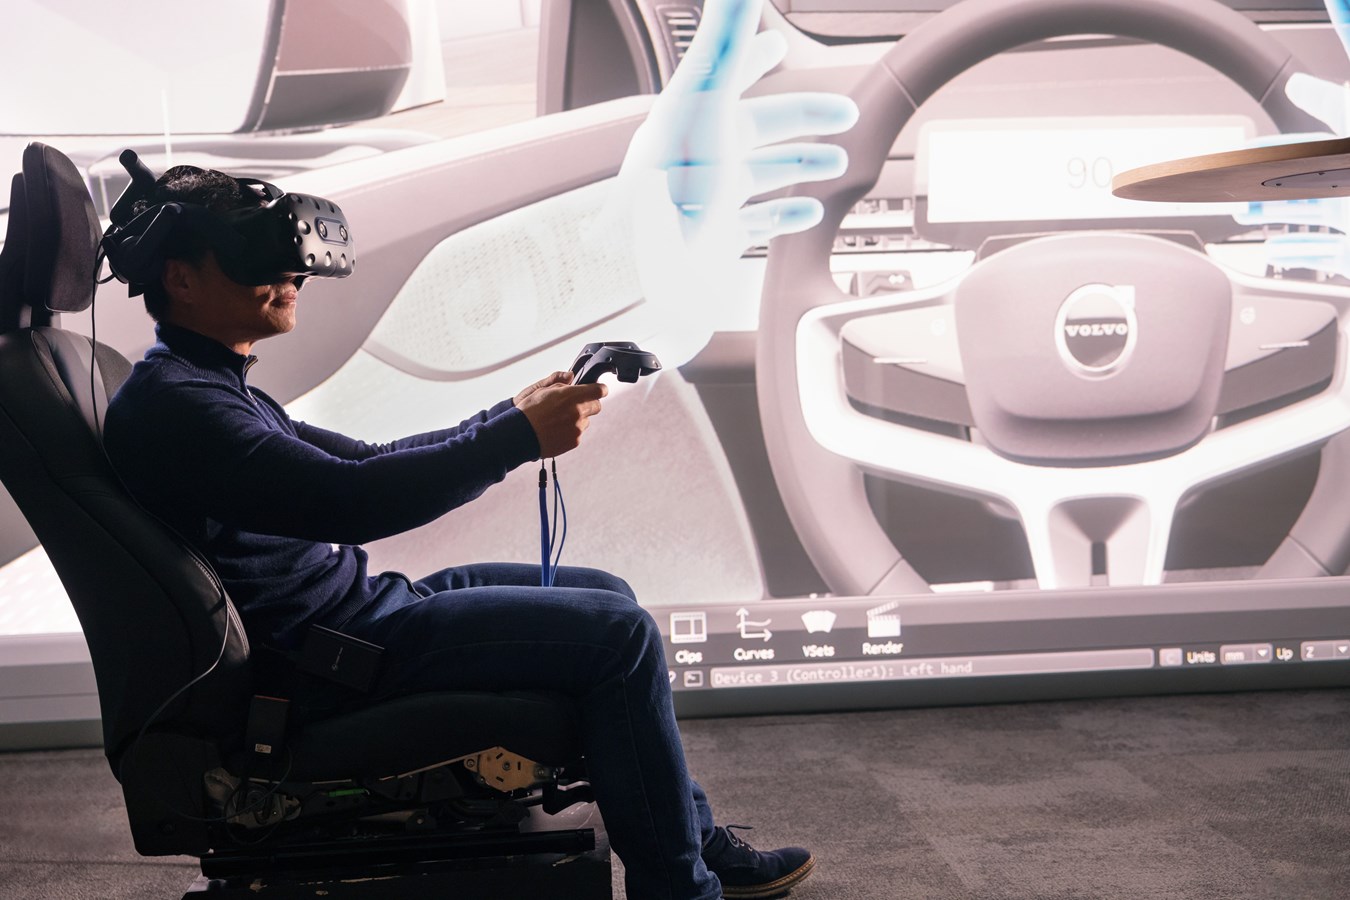 Designer is exploring design in the virtual world through VR environments